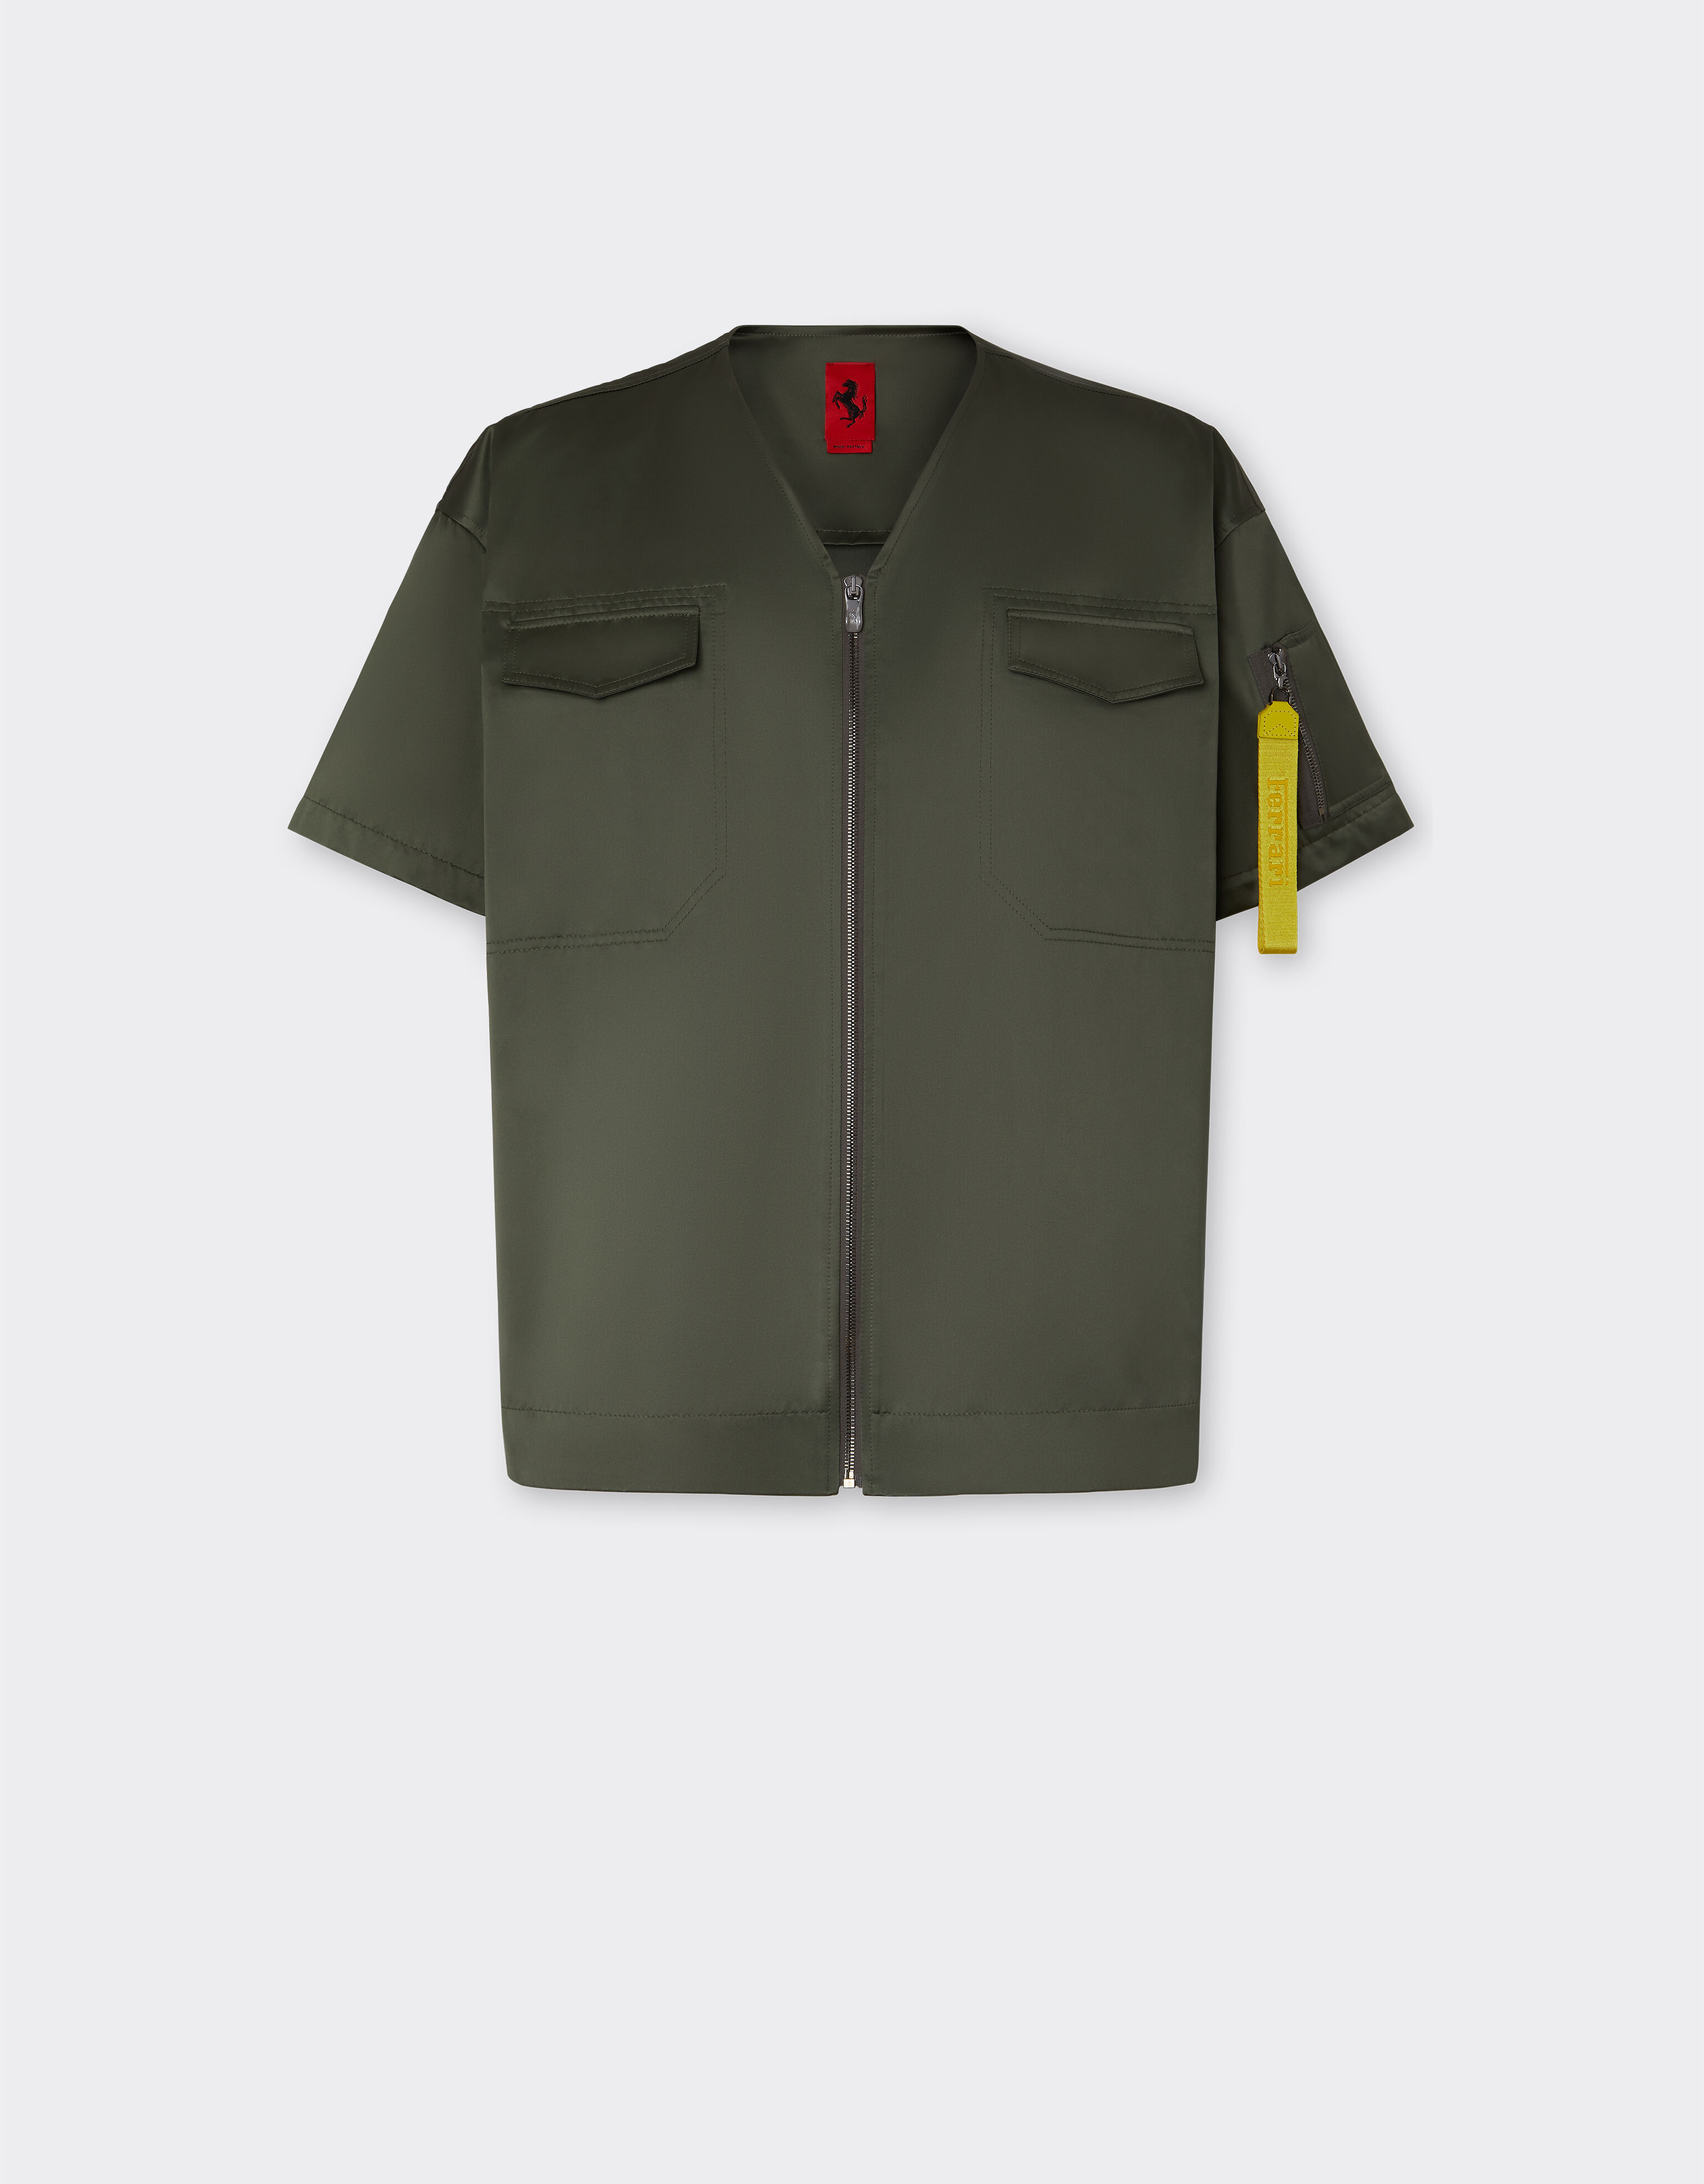 Ferrari Short-sleeved shirt in eco-nylon fabric Giallo Modena 48314f